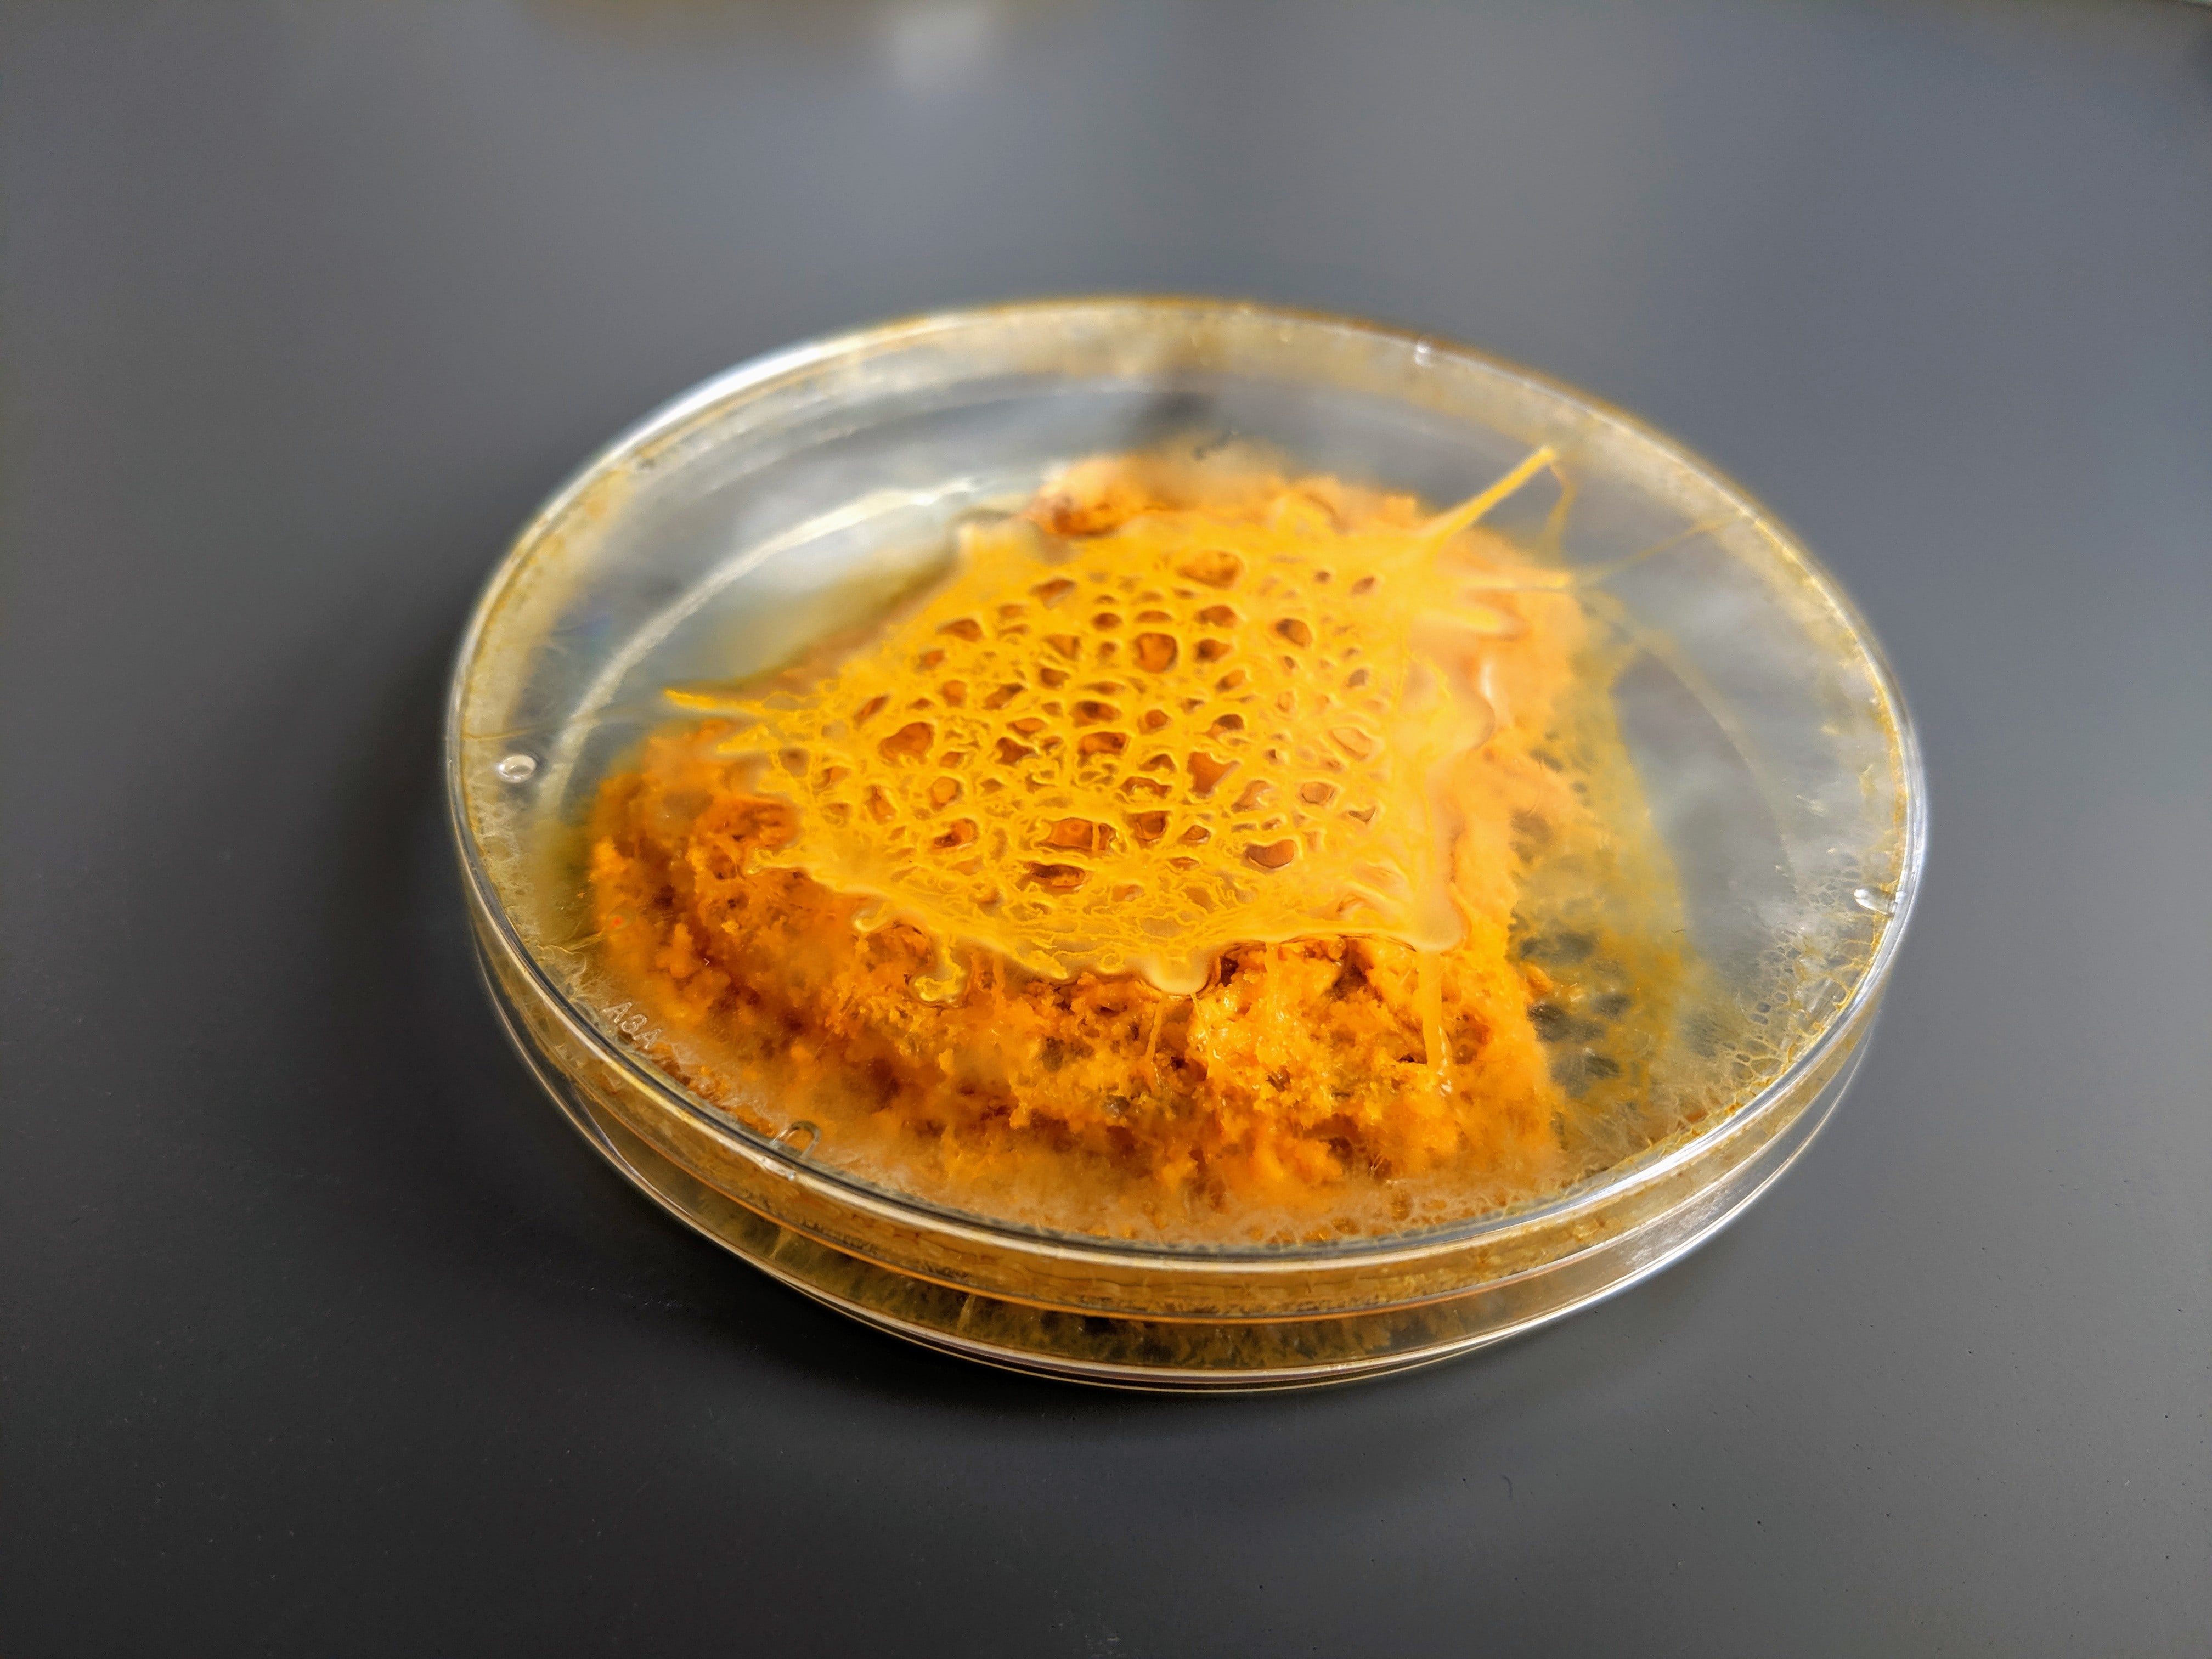 Slime mold in petri dish 